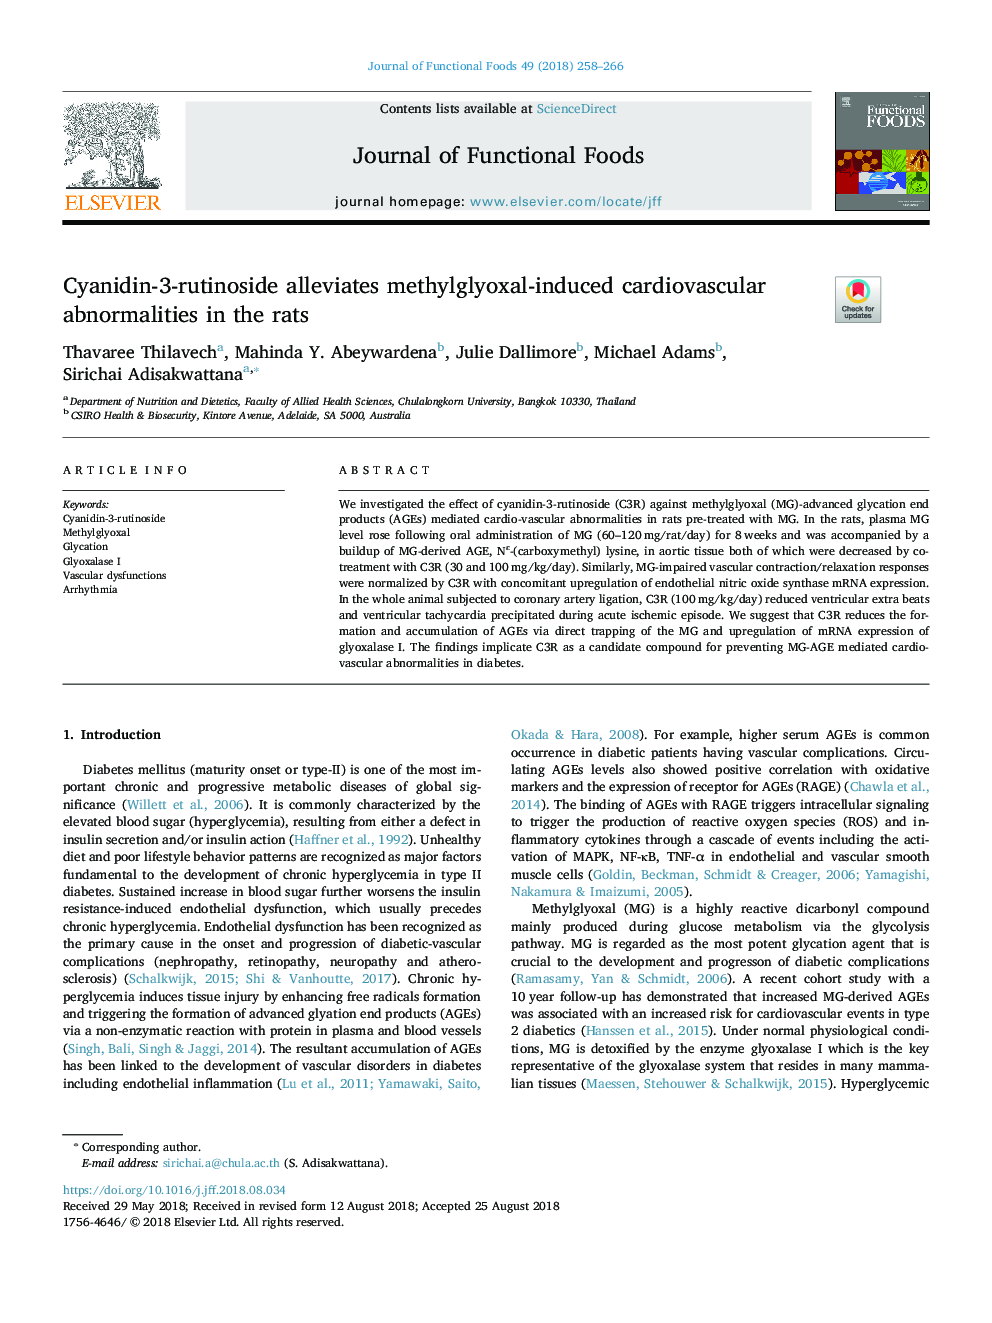 Cyanidin-3-rutinoside alleviates methylglyoxal-induced cardiovascular abnormalities in the rats